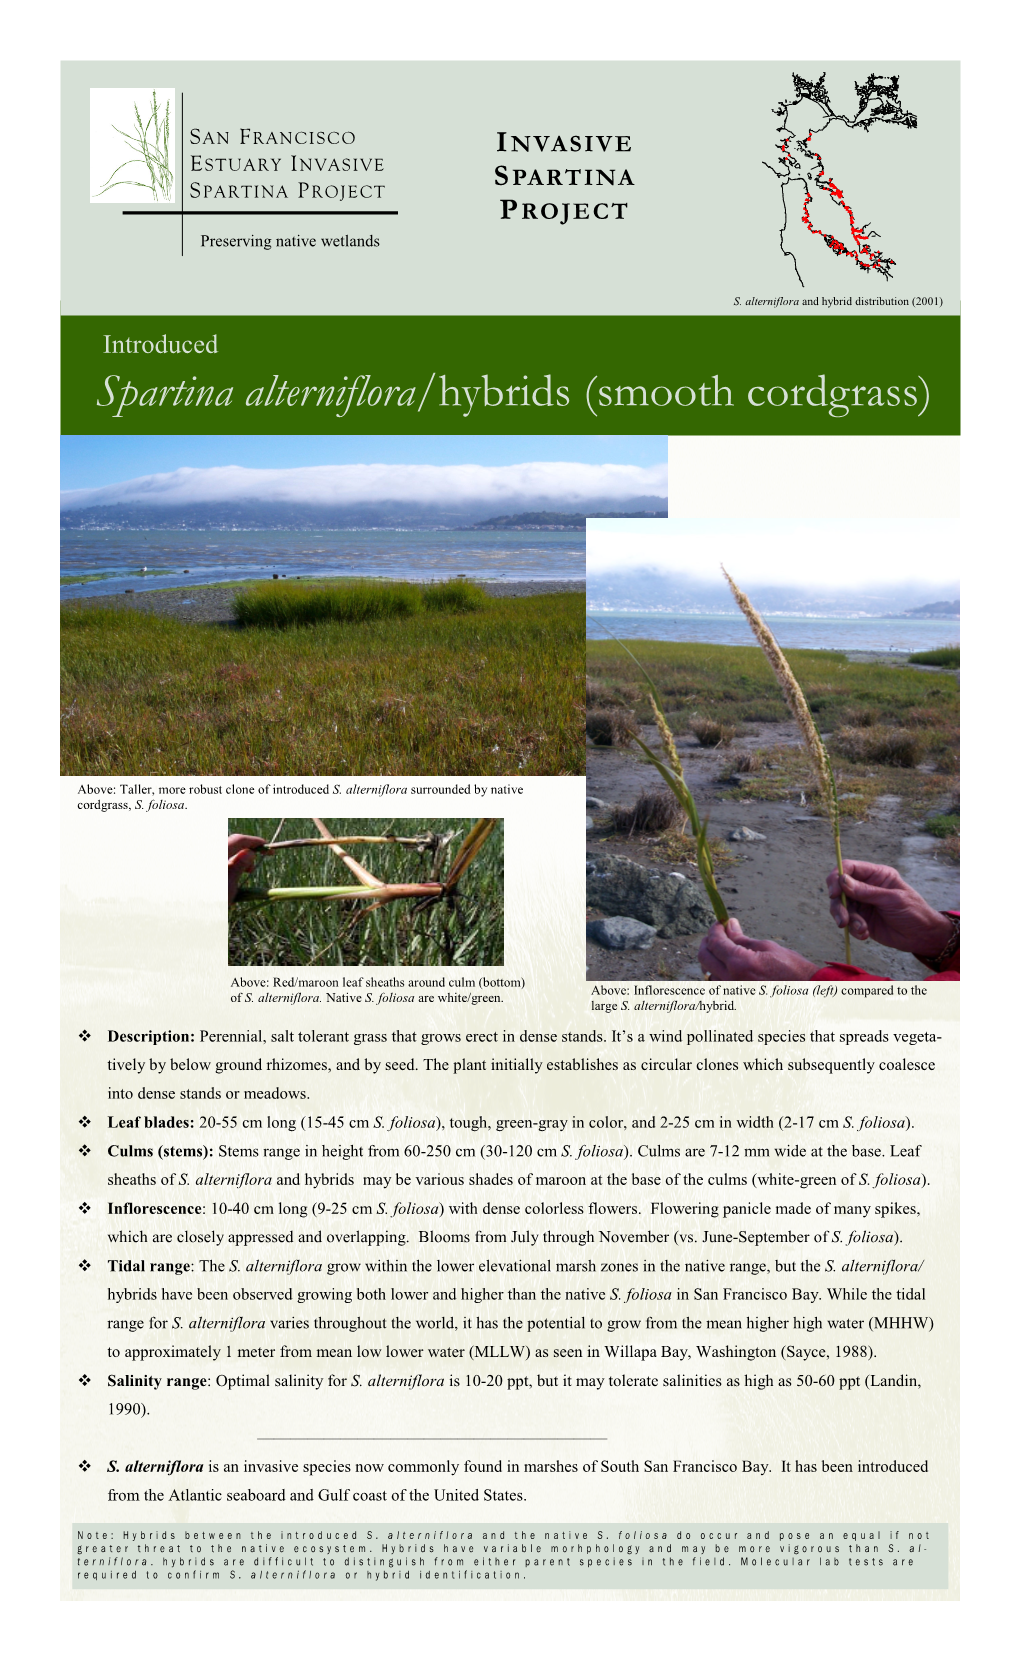 Spartina Alterniflora/Hybrids (Smooth Cordgrass)